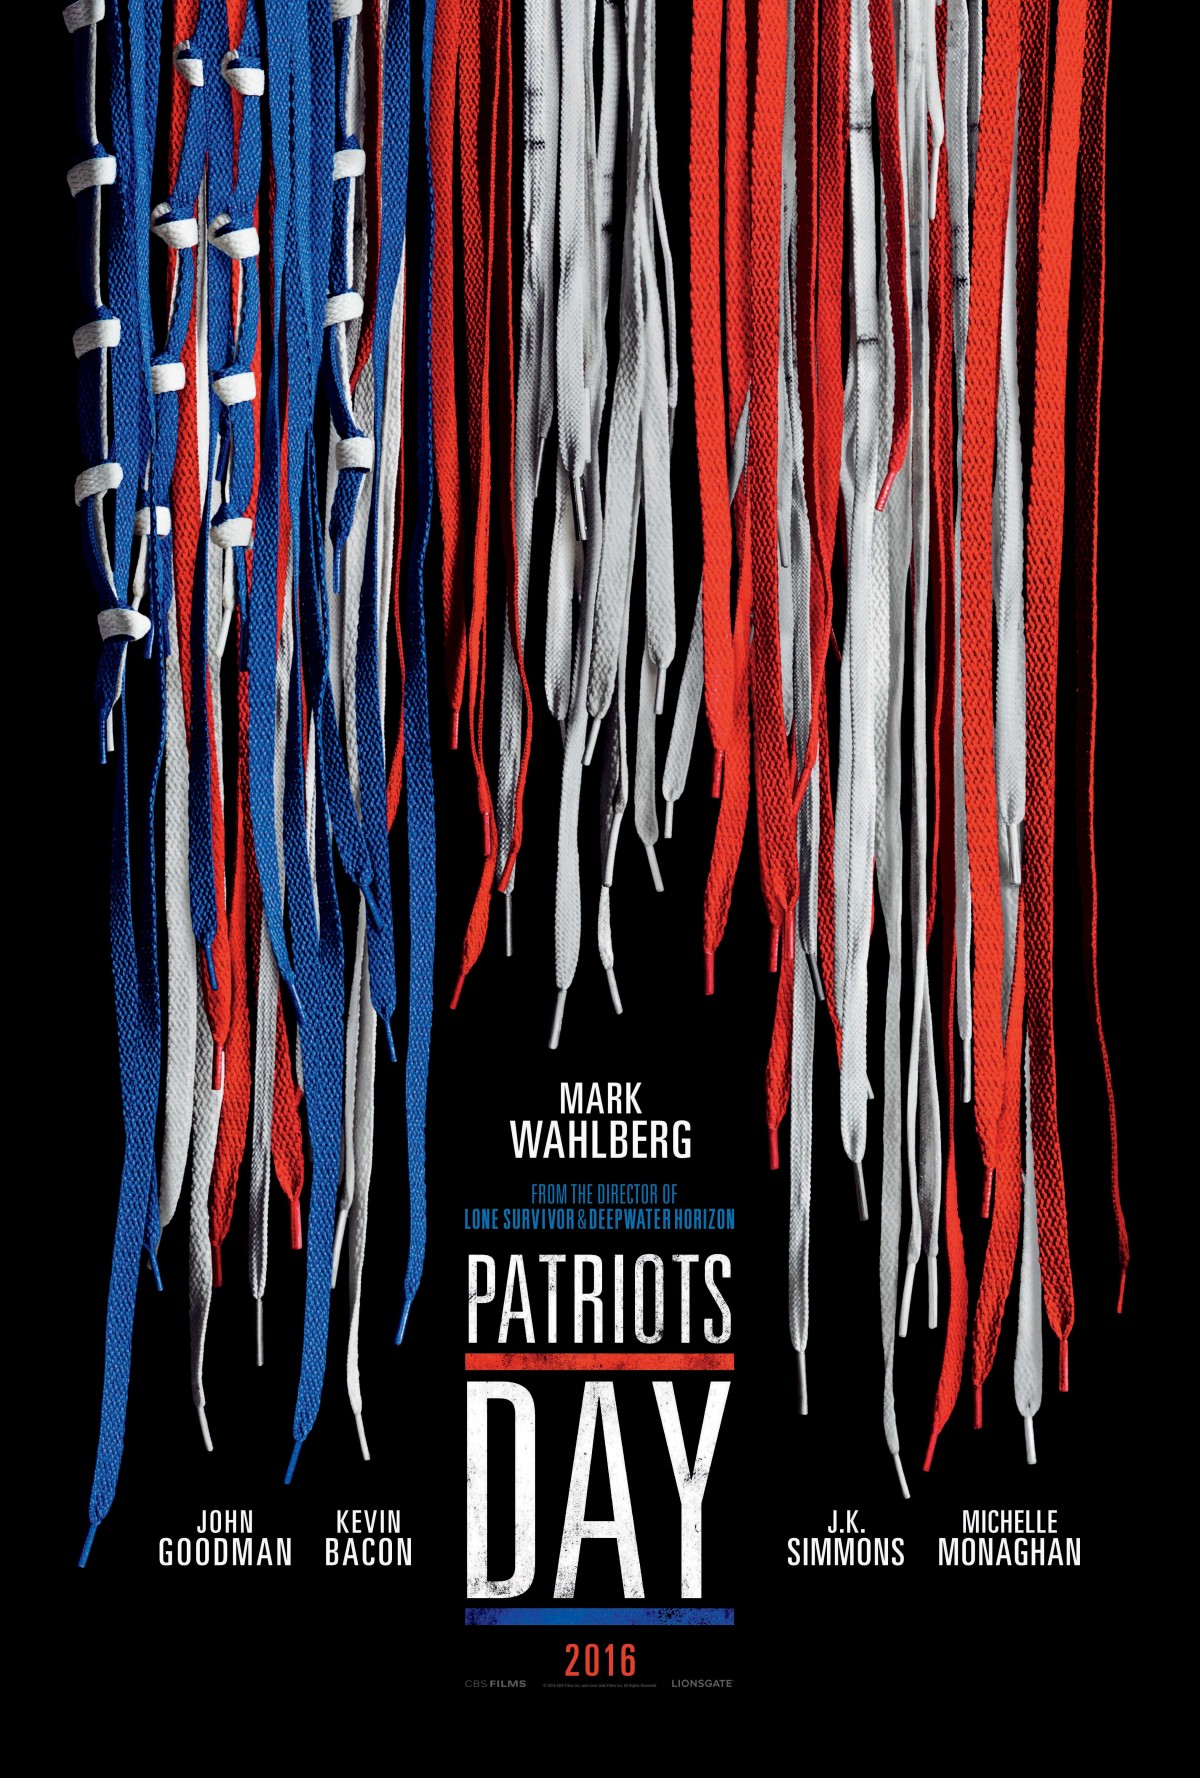 Patriots_Day_poster-e1467811900635.jpg